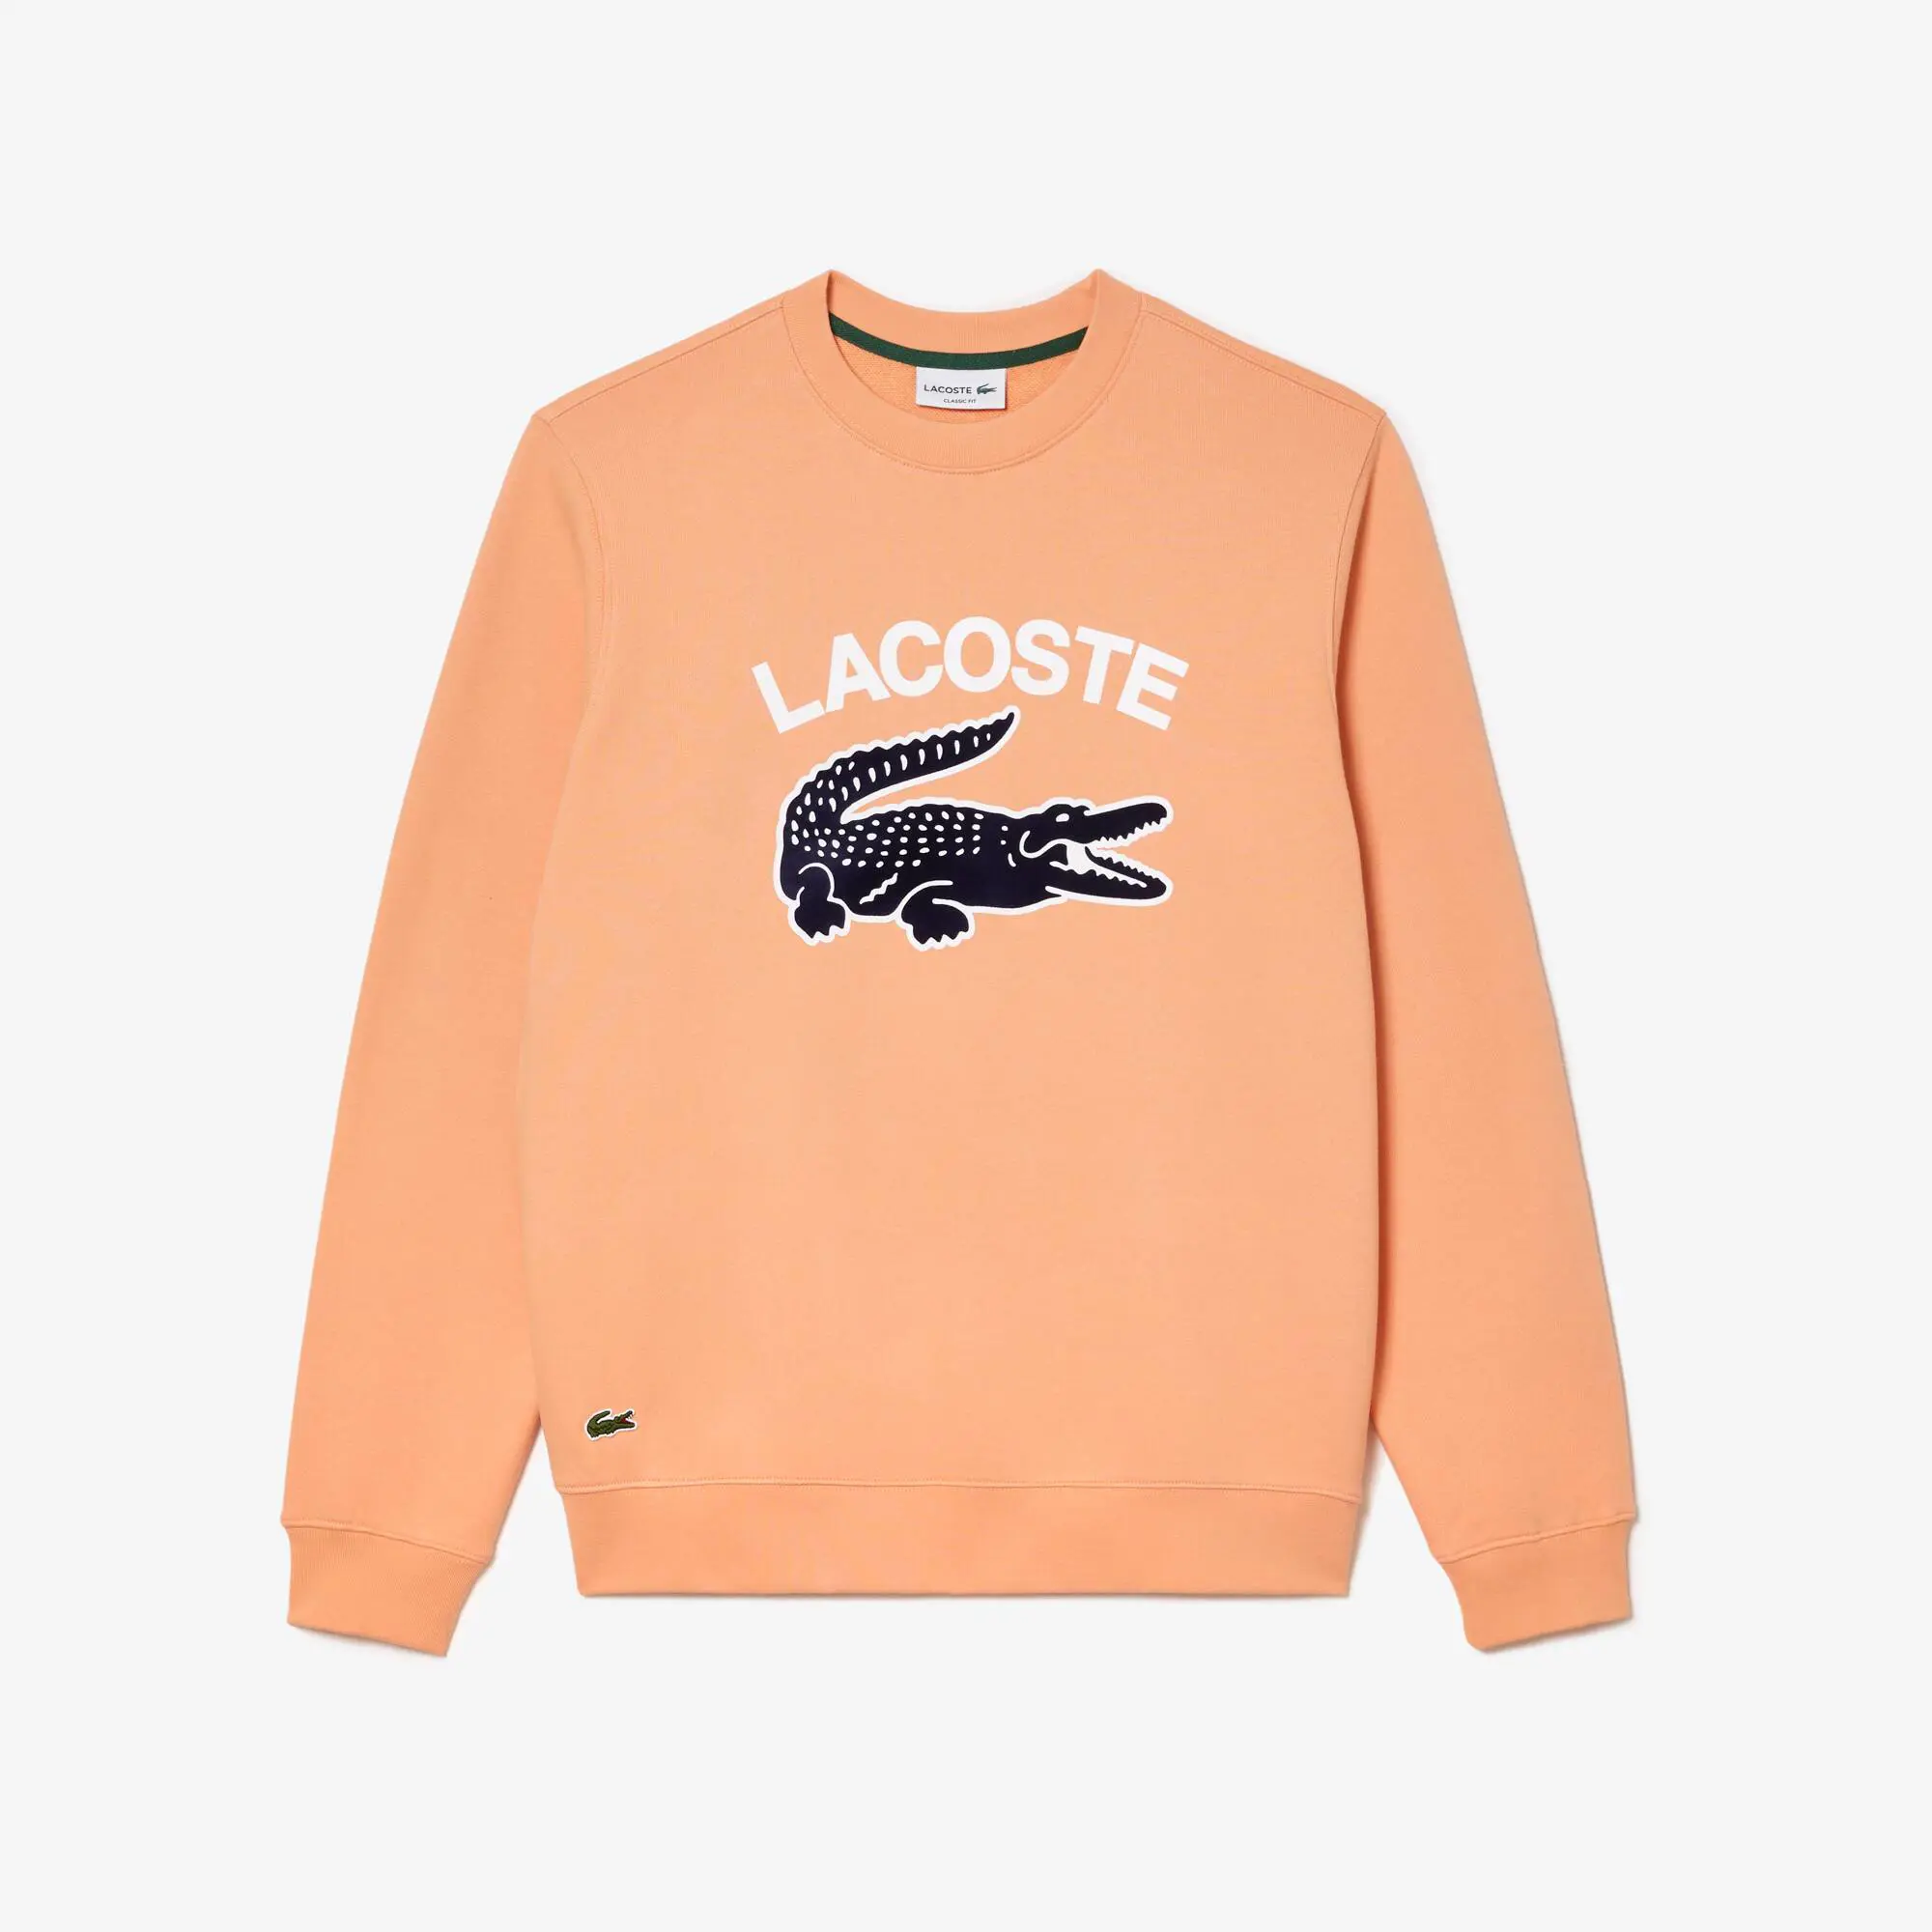 Lacoste Men's Lacoste Crocodile Print Crew Neck Sweatshirt. 2